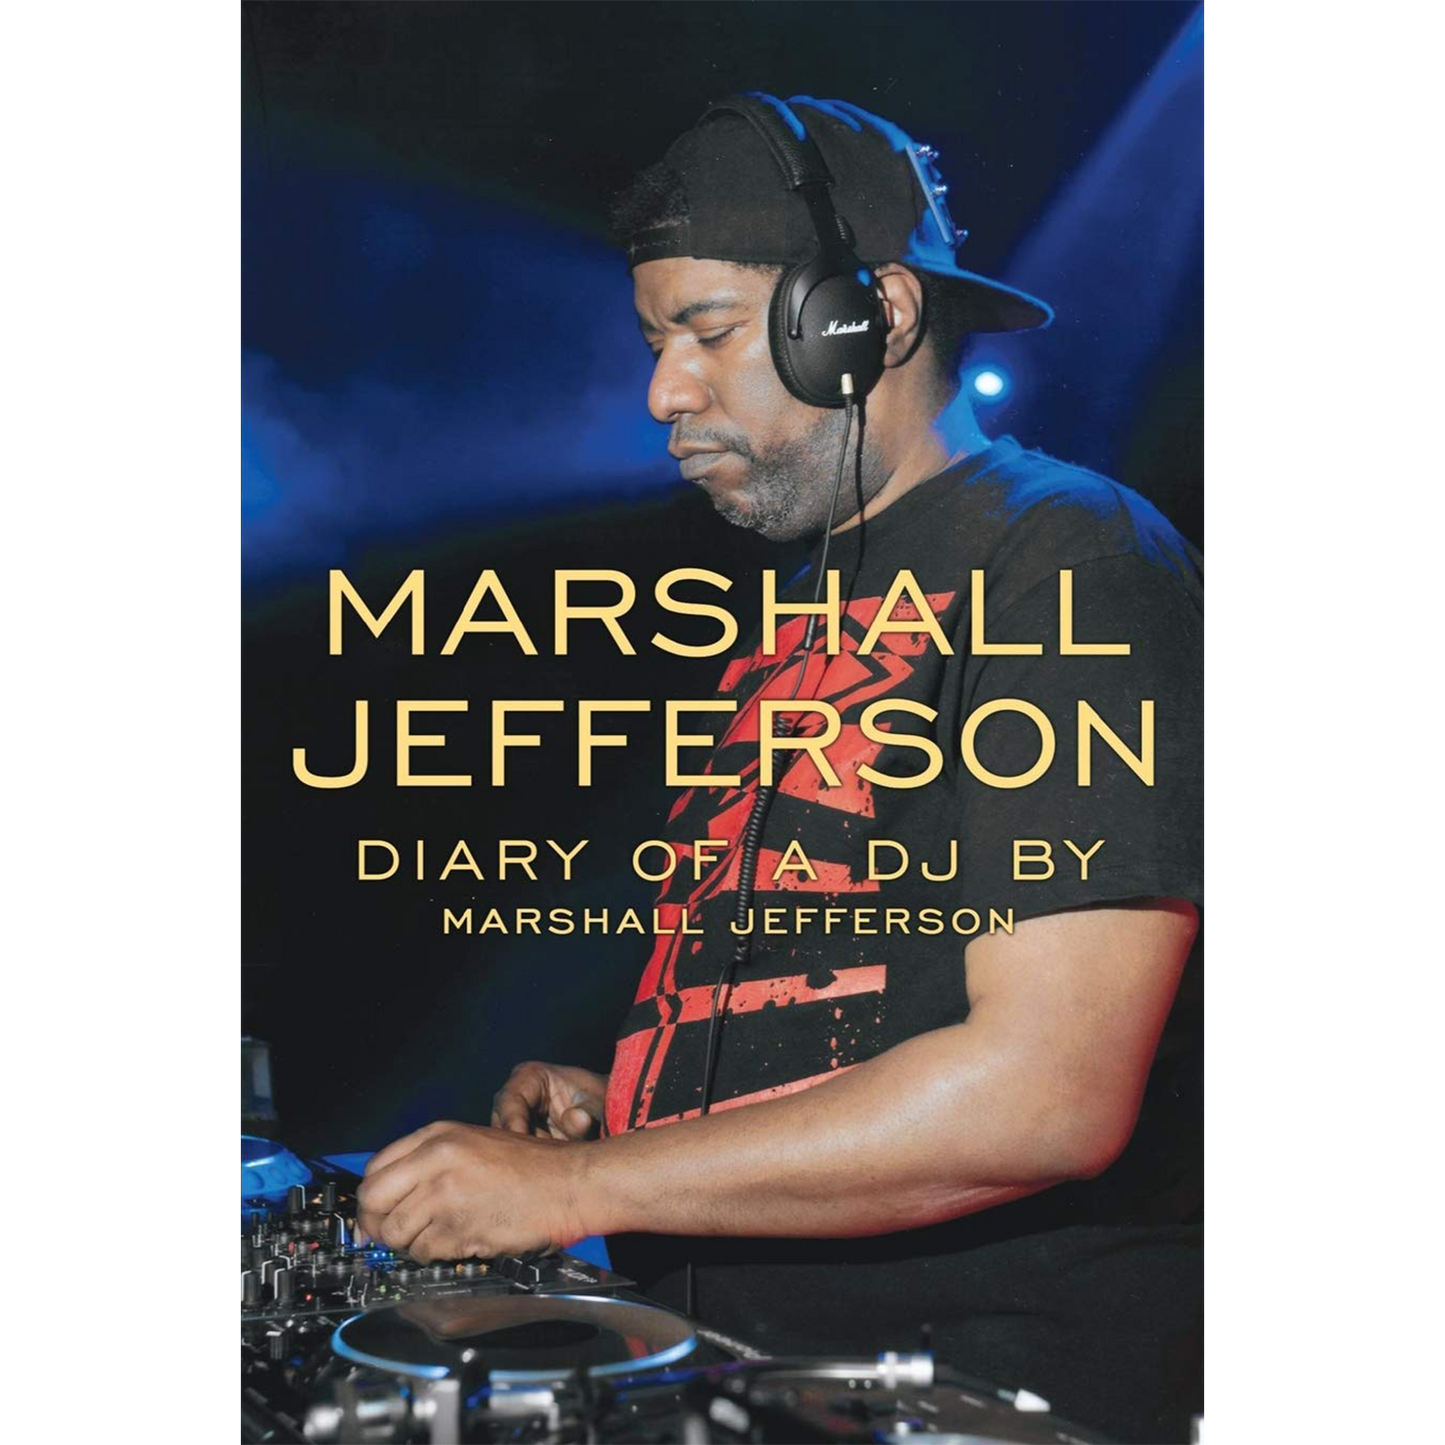 Marshall Jefferson: The Diary of a DJ